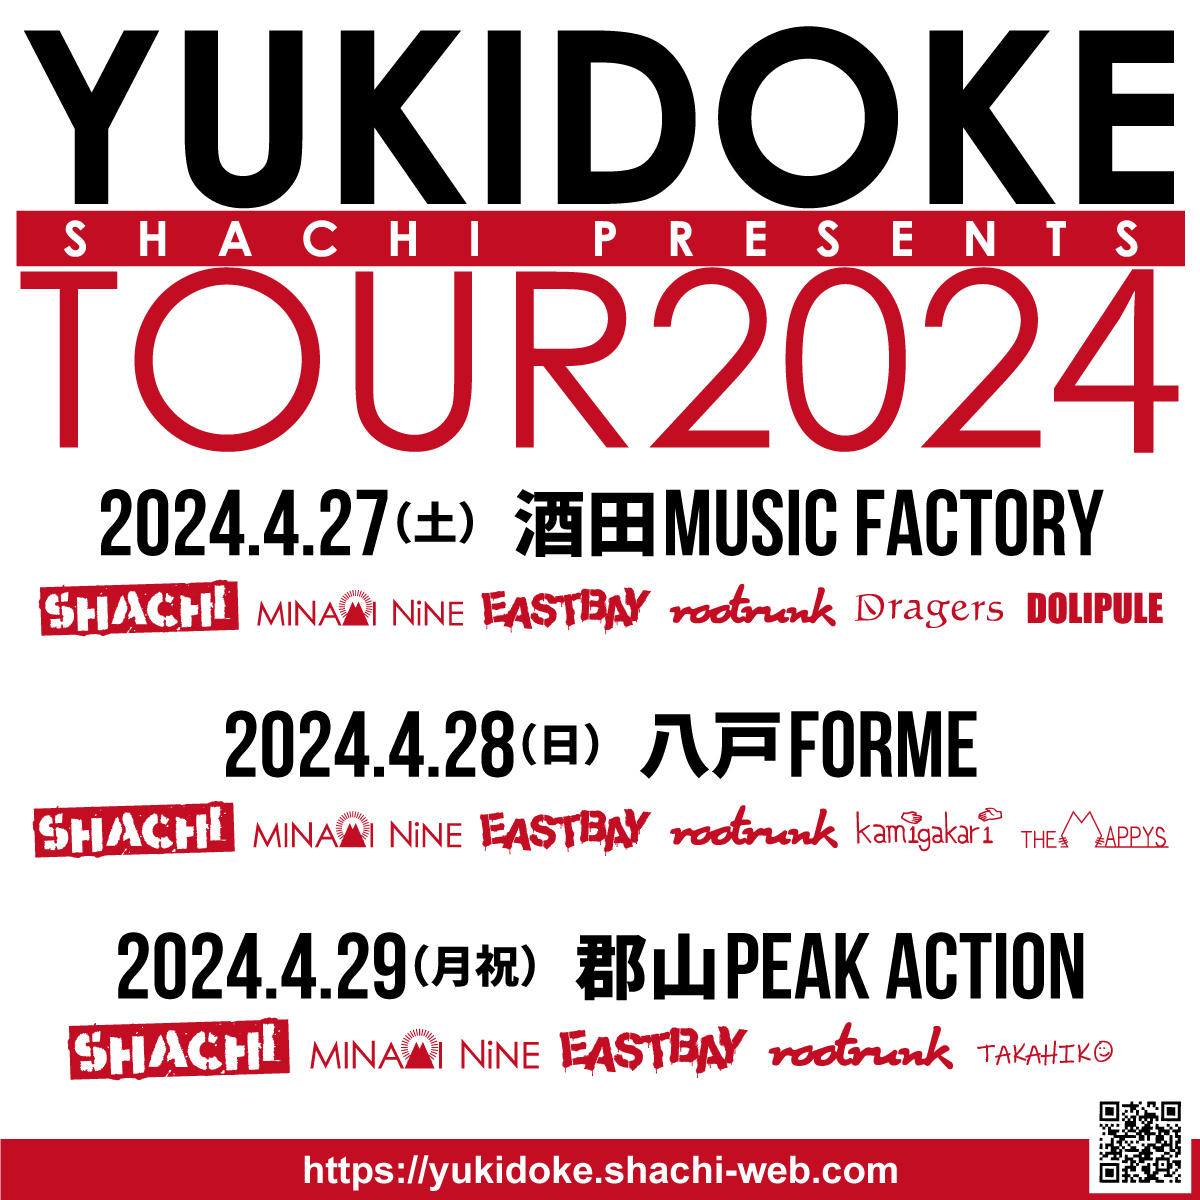 SHACHI pre “YUKIDOKE TOUR2024” 郡山の写真